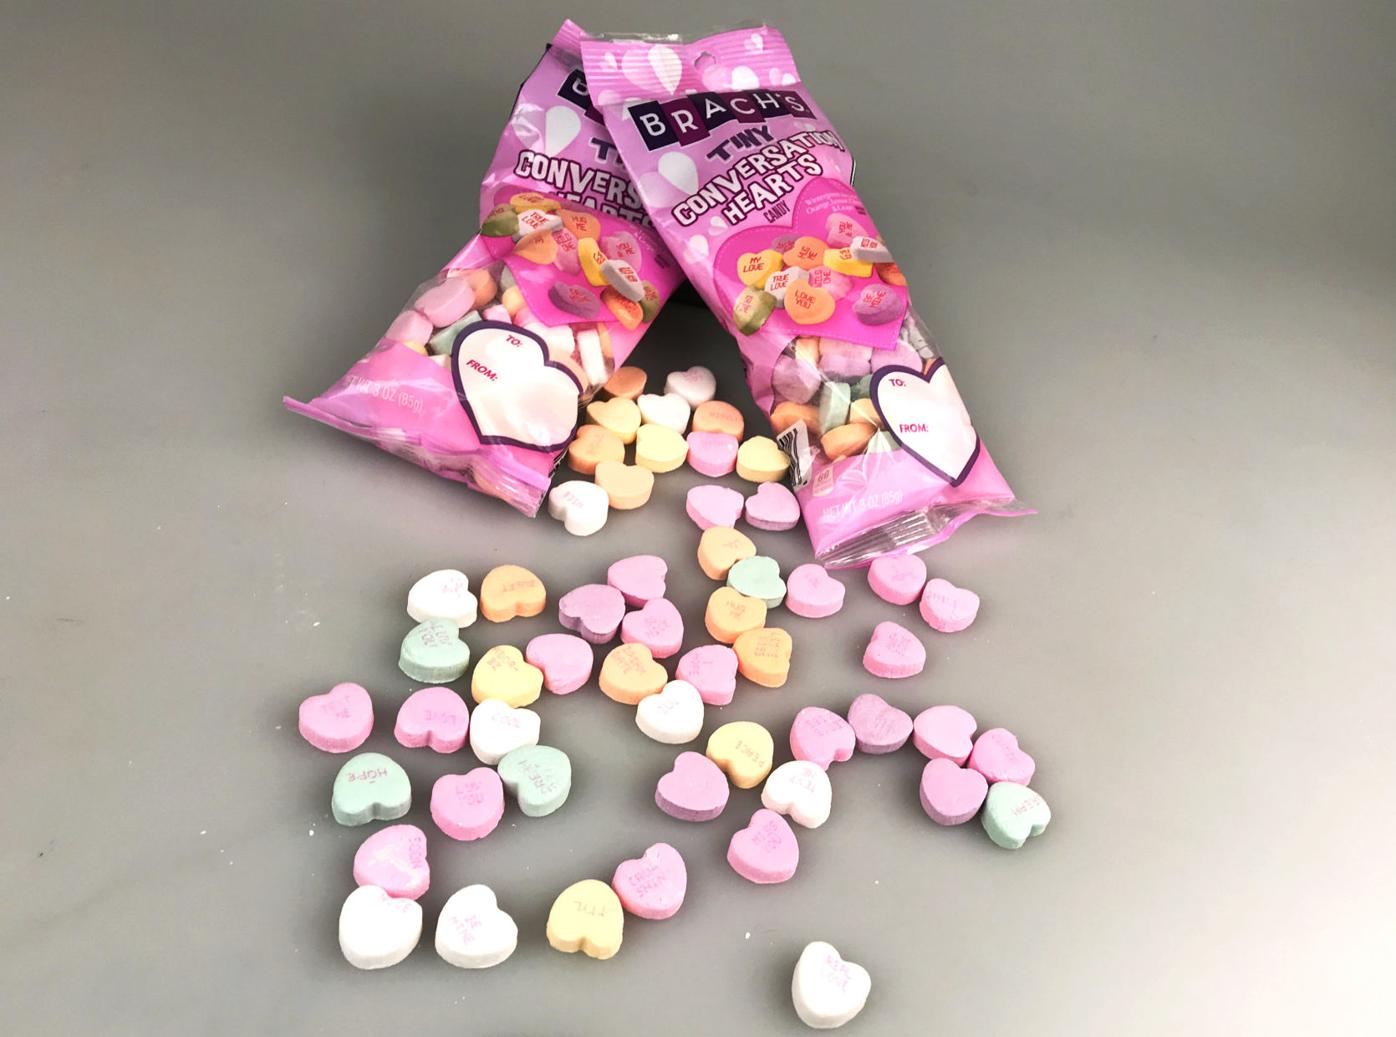 Brach's® Heart 2 Heart Tiny Conversation Hearts Candy, 30 oz - Foods Co.